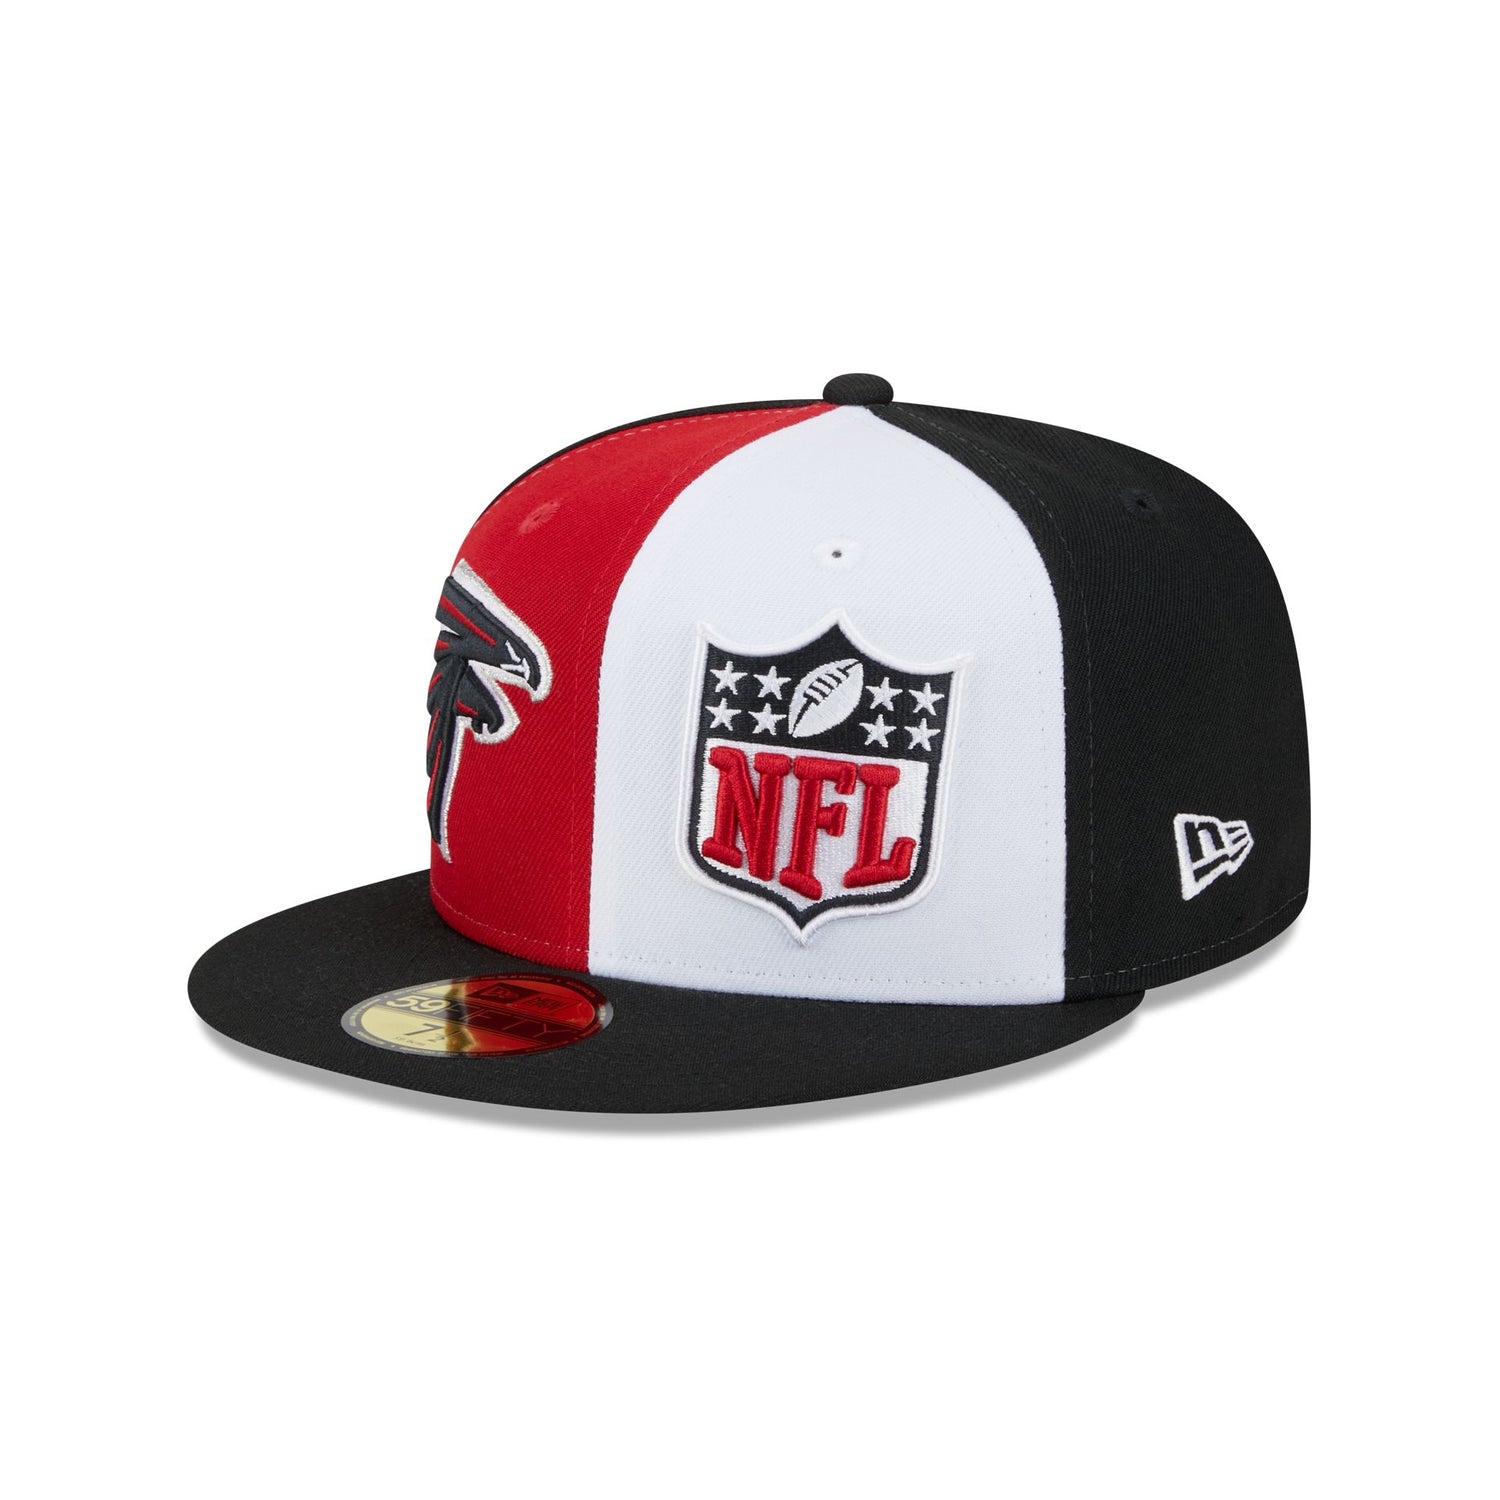 NFL Collection – New Era Cap